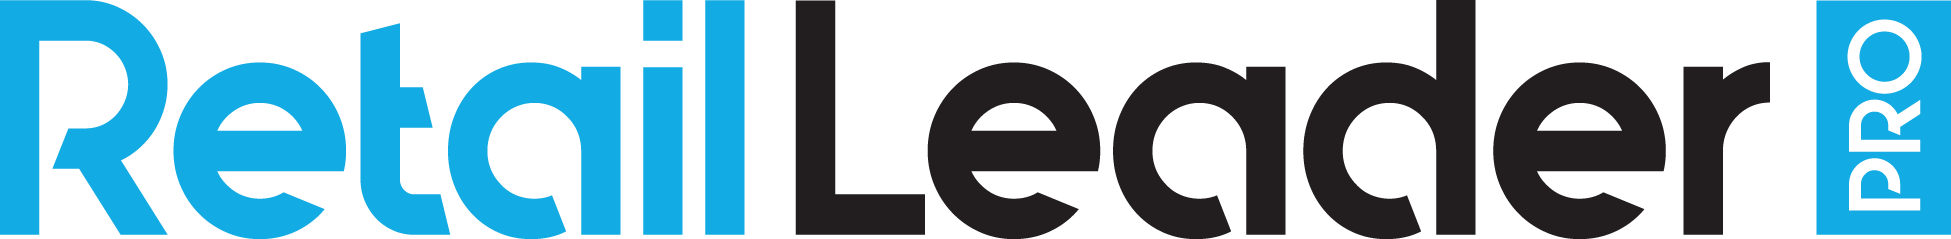 Retail Leader Pro logo